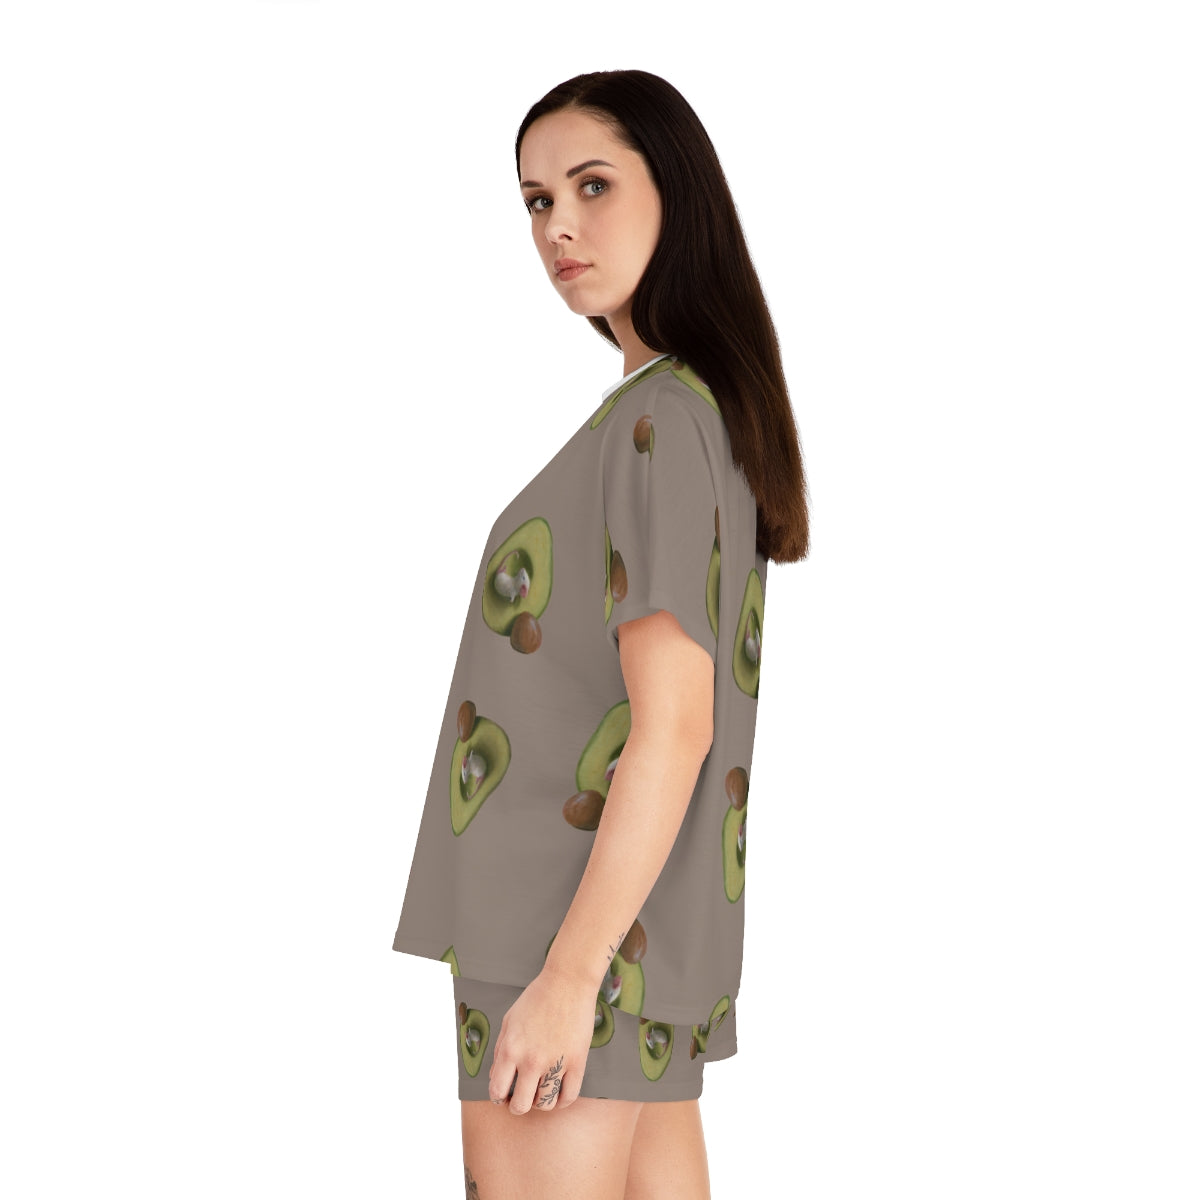 Stuart Dunkel: "Nappy" Women's Short Pajama Set